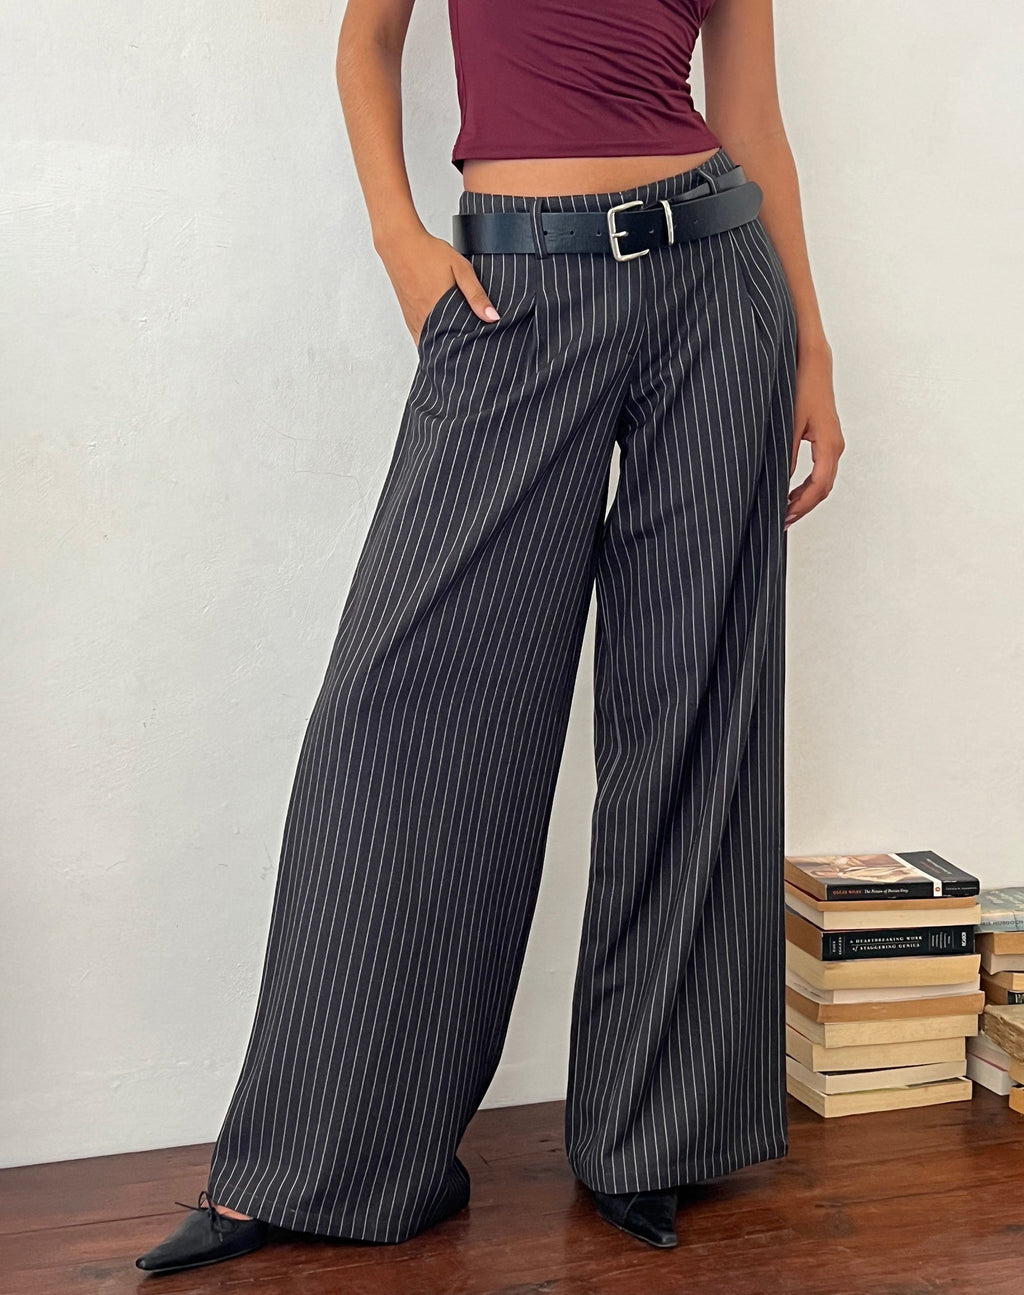 Sagawa Tailored Trouser in Dark Grey Pinstripe (pantalon de tailleur à rayures gris foncé)